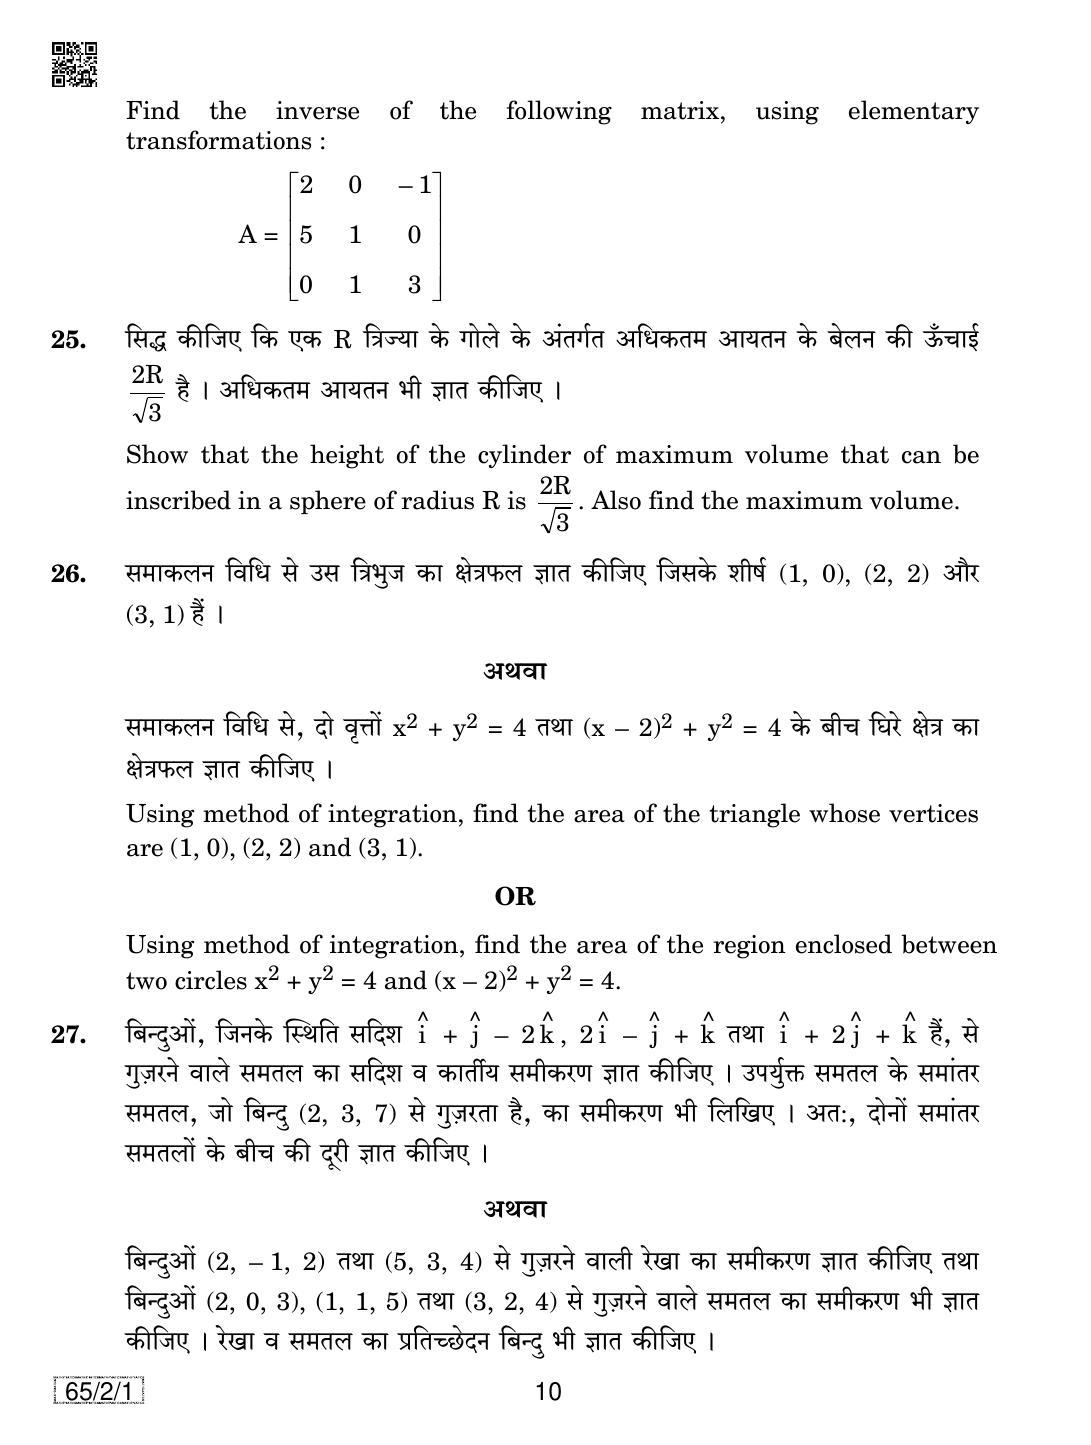 CBSE Class 12 65-2-1 Mathematics 2019 Question Paper - Page 10